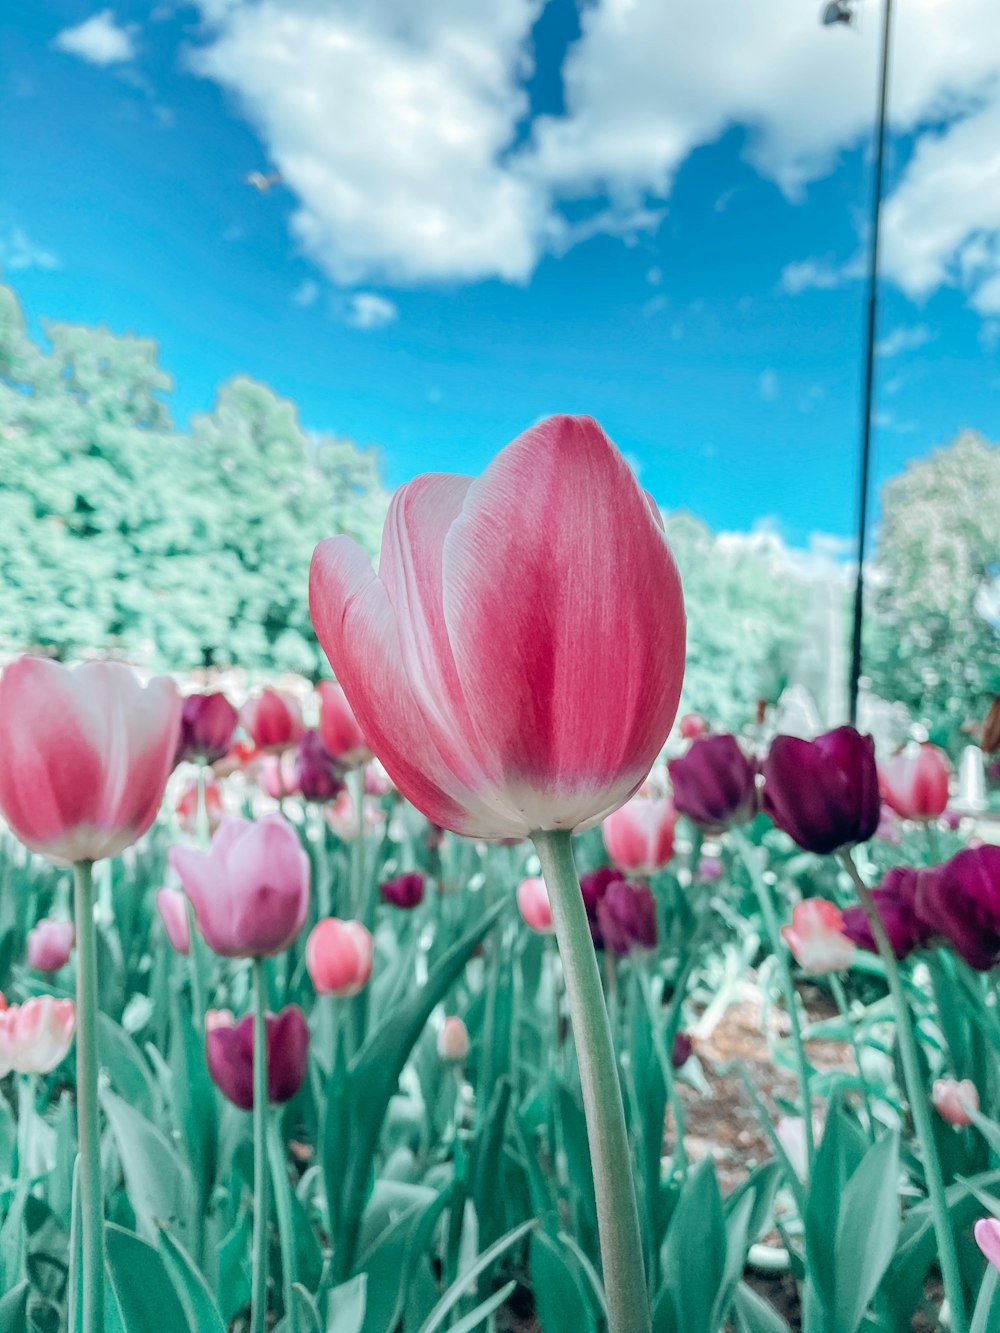 pink tulips under blue sky during daytime